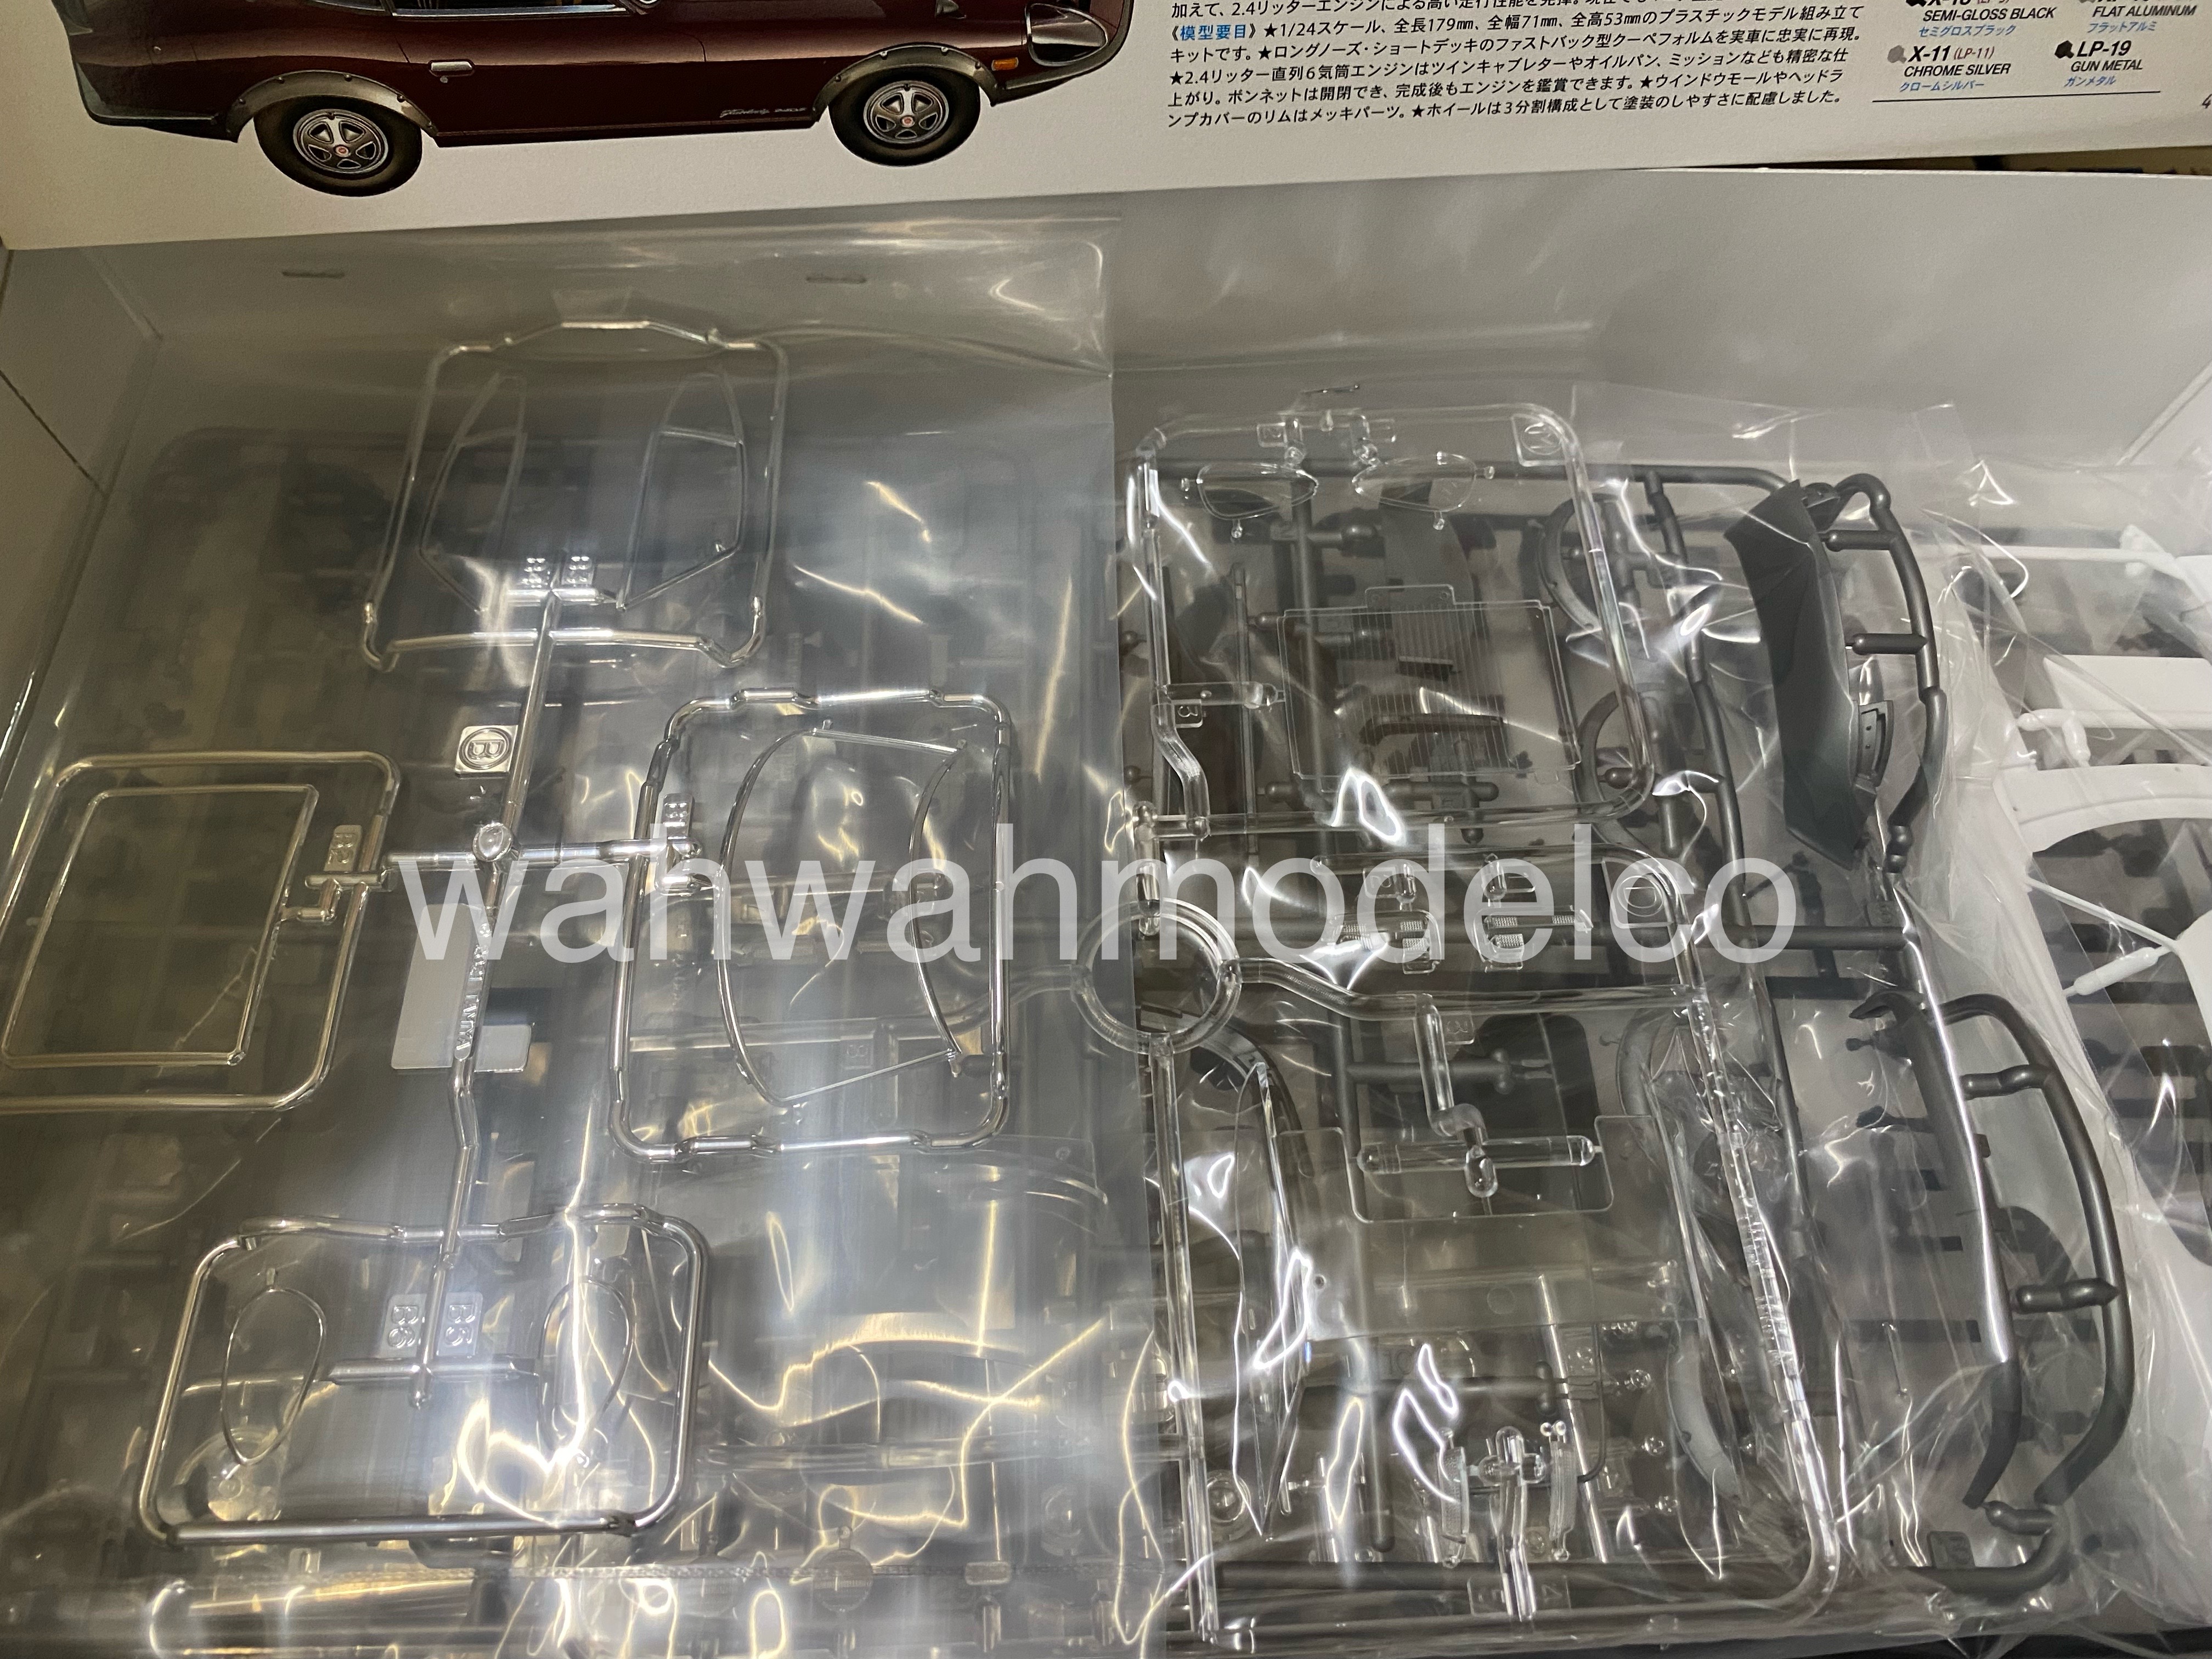 Tamiya 24360 - 1/24 Nissan Fairlady 240ZG Plastic Model Kit - Hub Hobby